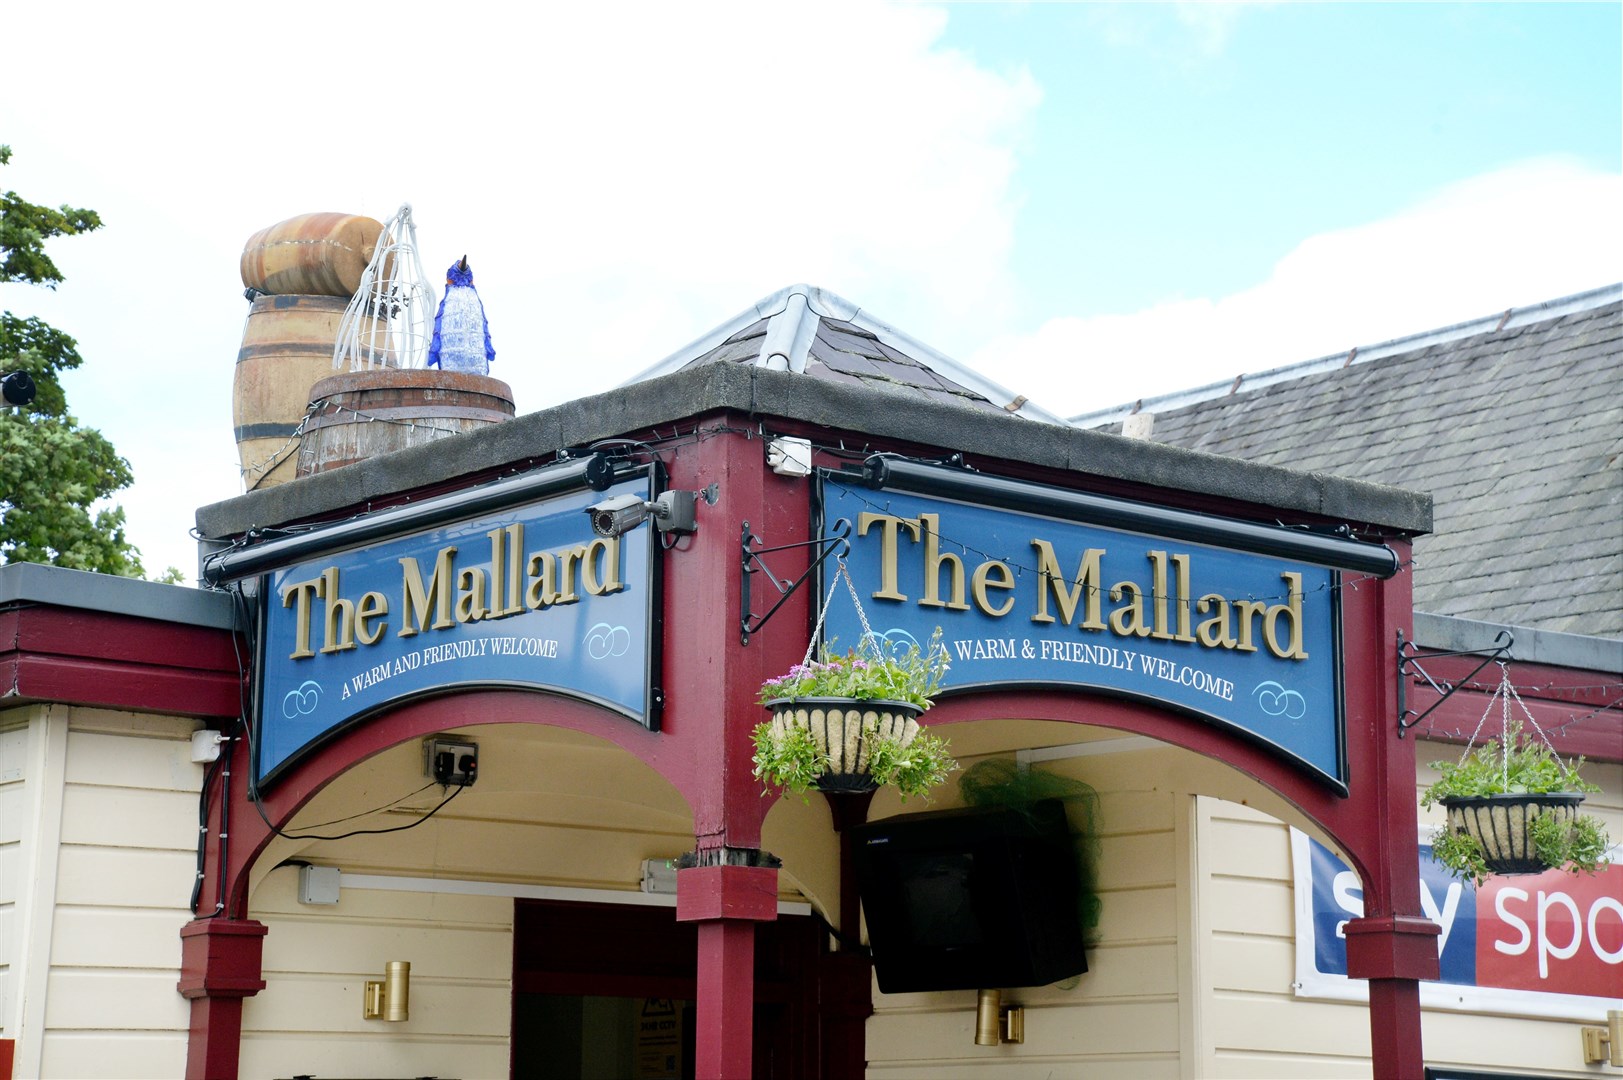 The Mallard at Dingwall Railway Station.